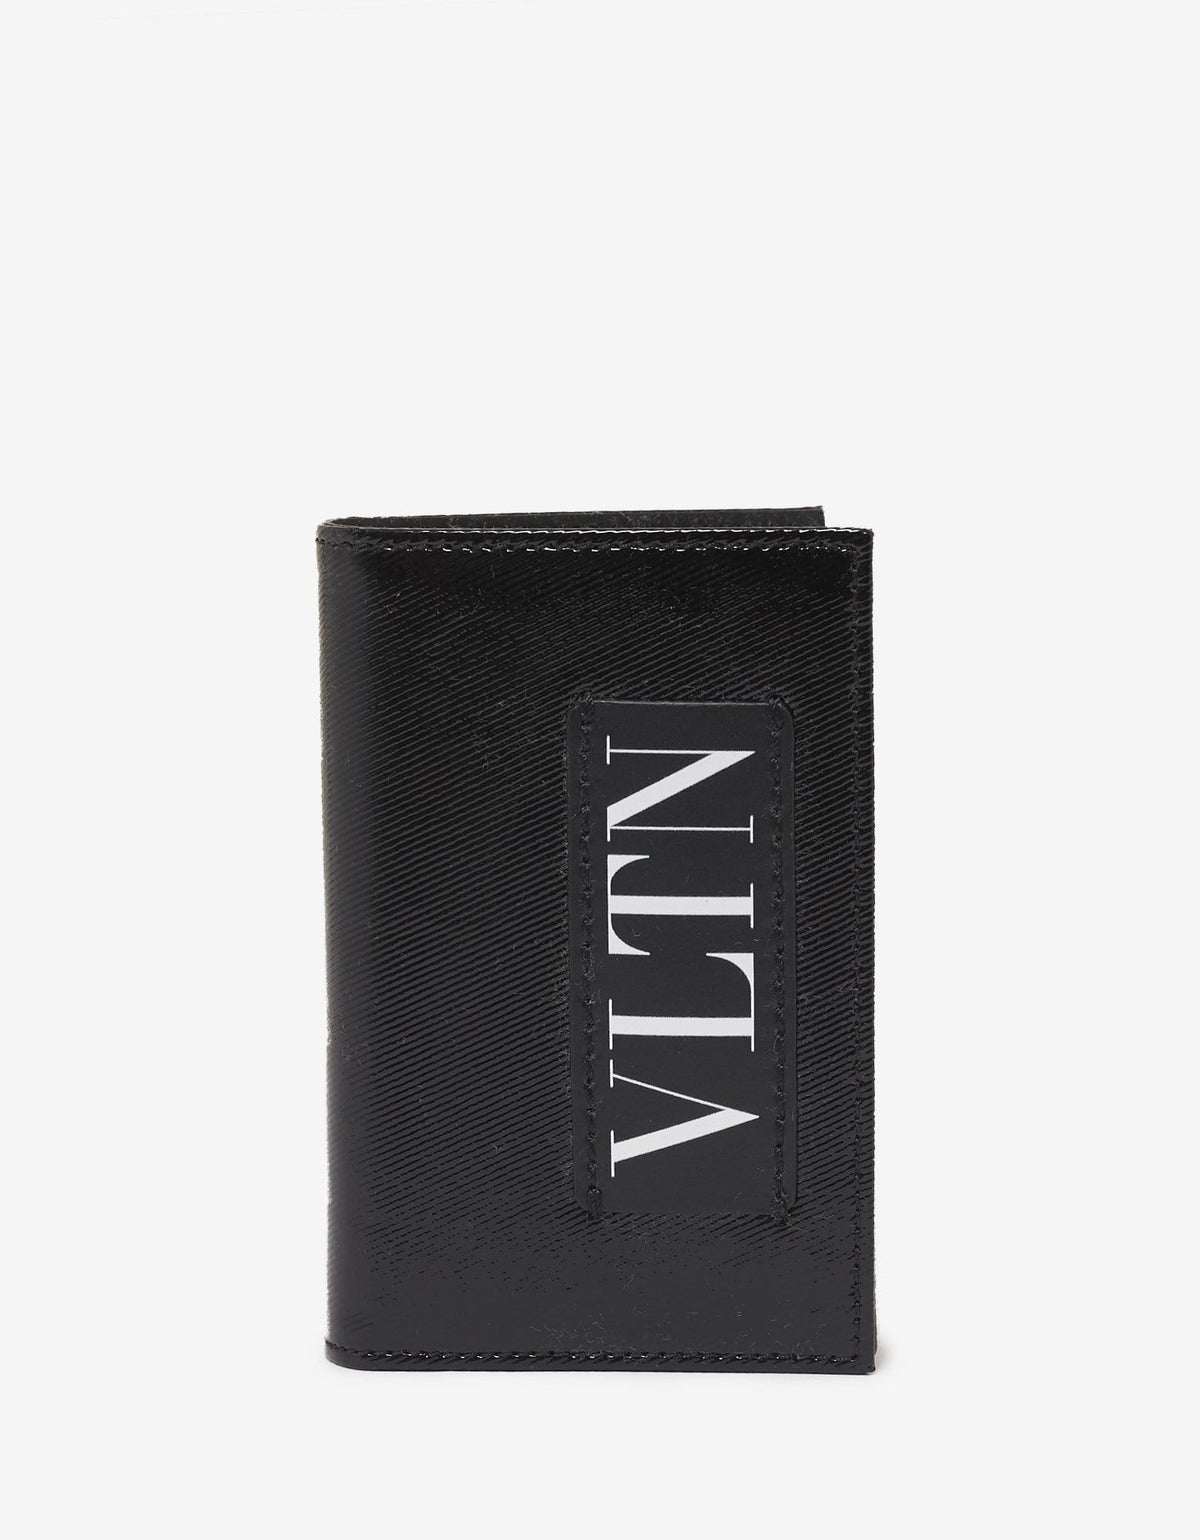 Valentino Garavani Black Patent Leather VLTN Card Wallet